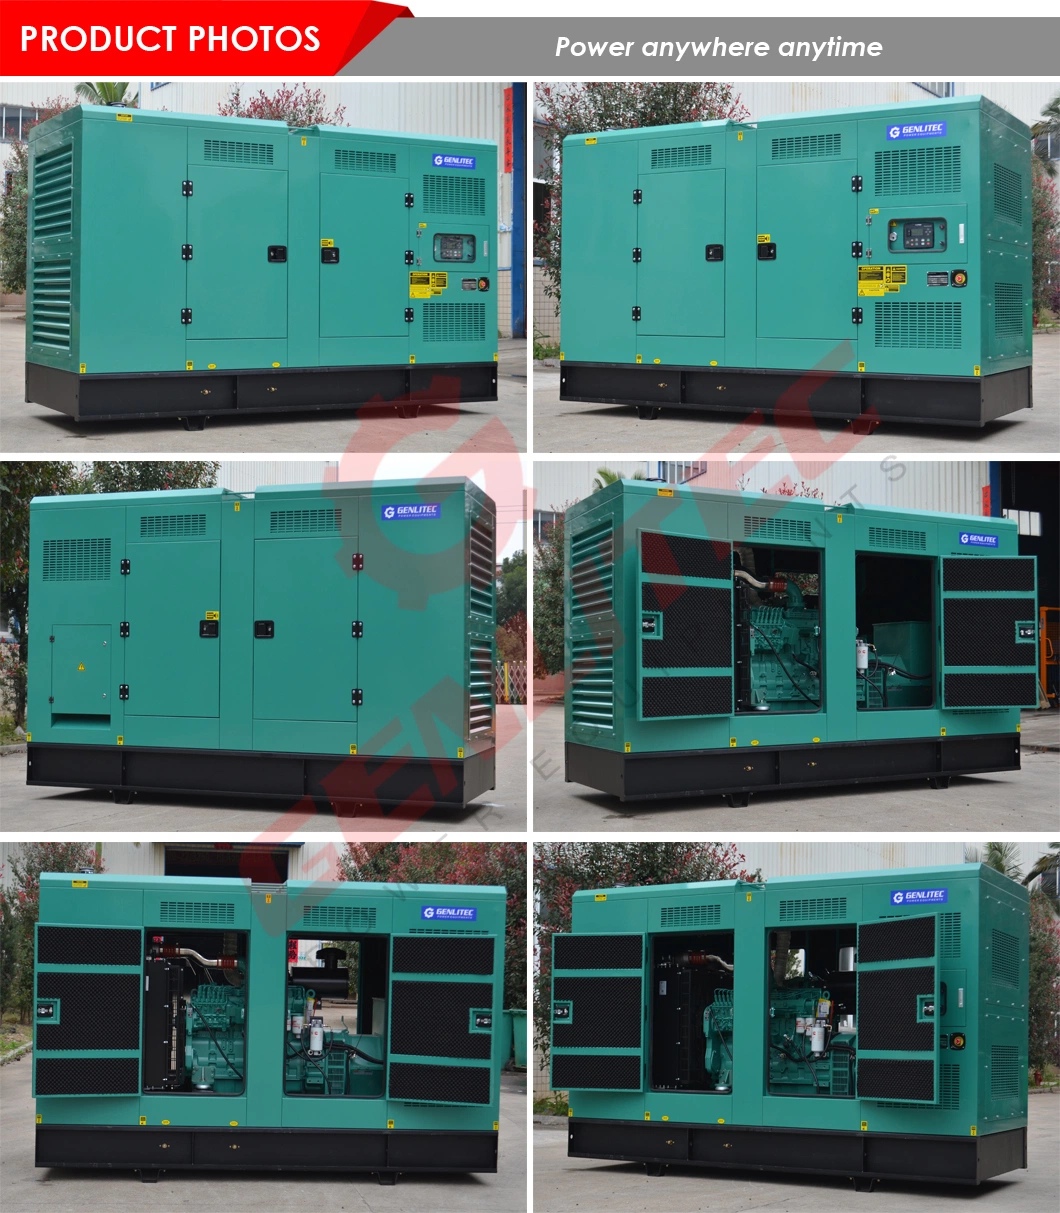 Heavy Duty Standby Power 550 kVA Cummins 440kw Silent Diesel Generator with Kta19-G4 Engine